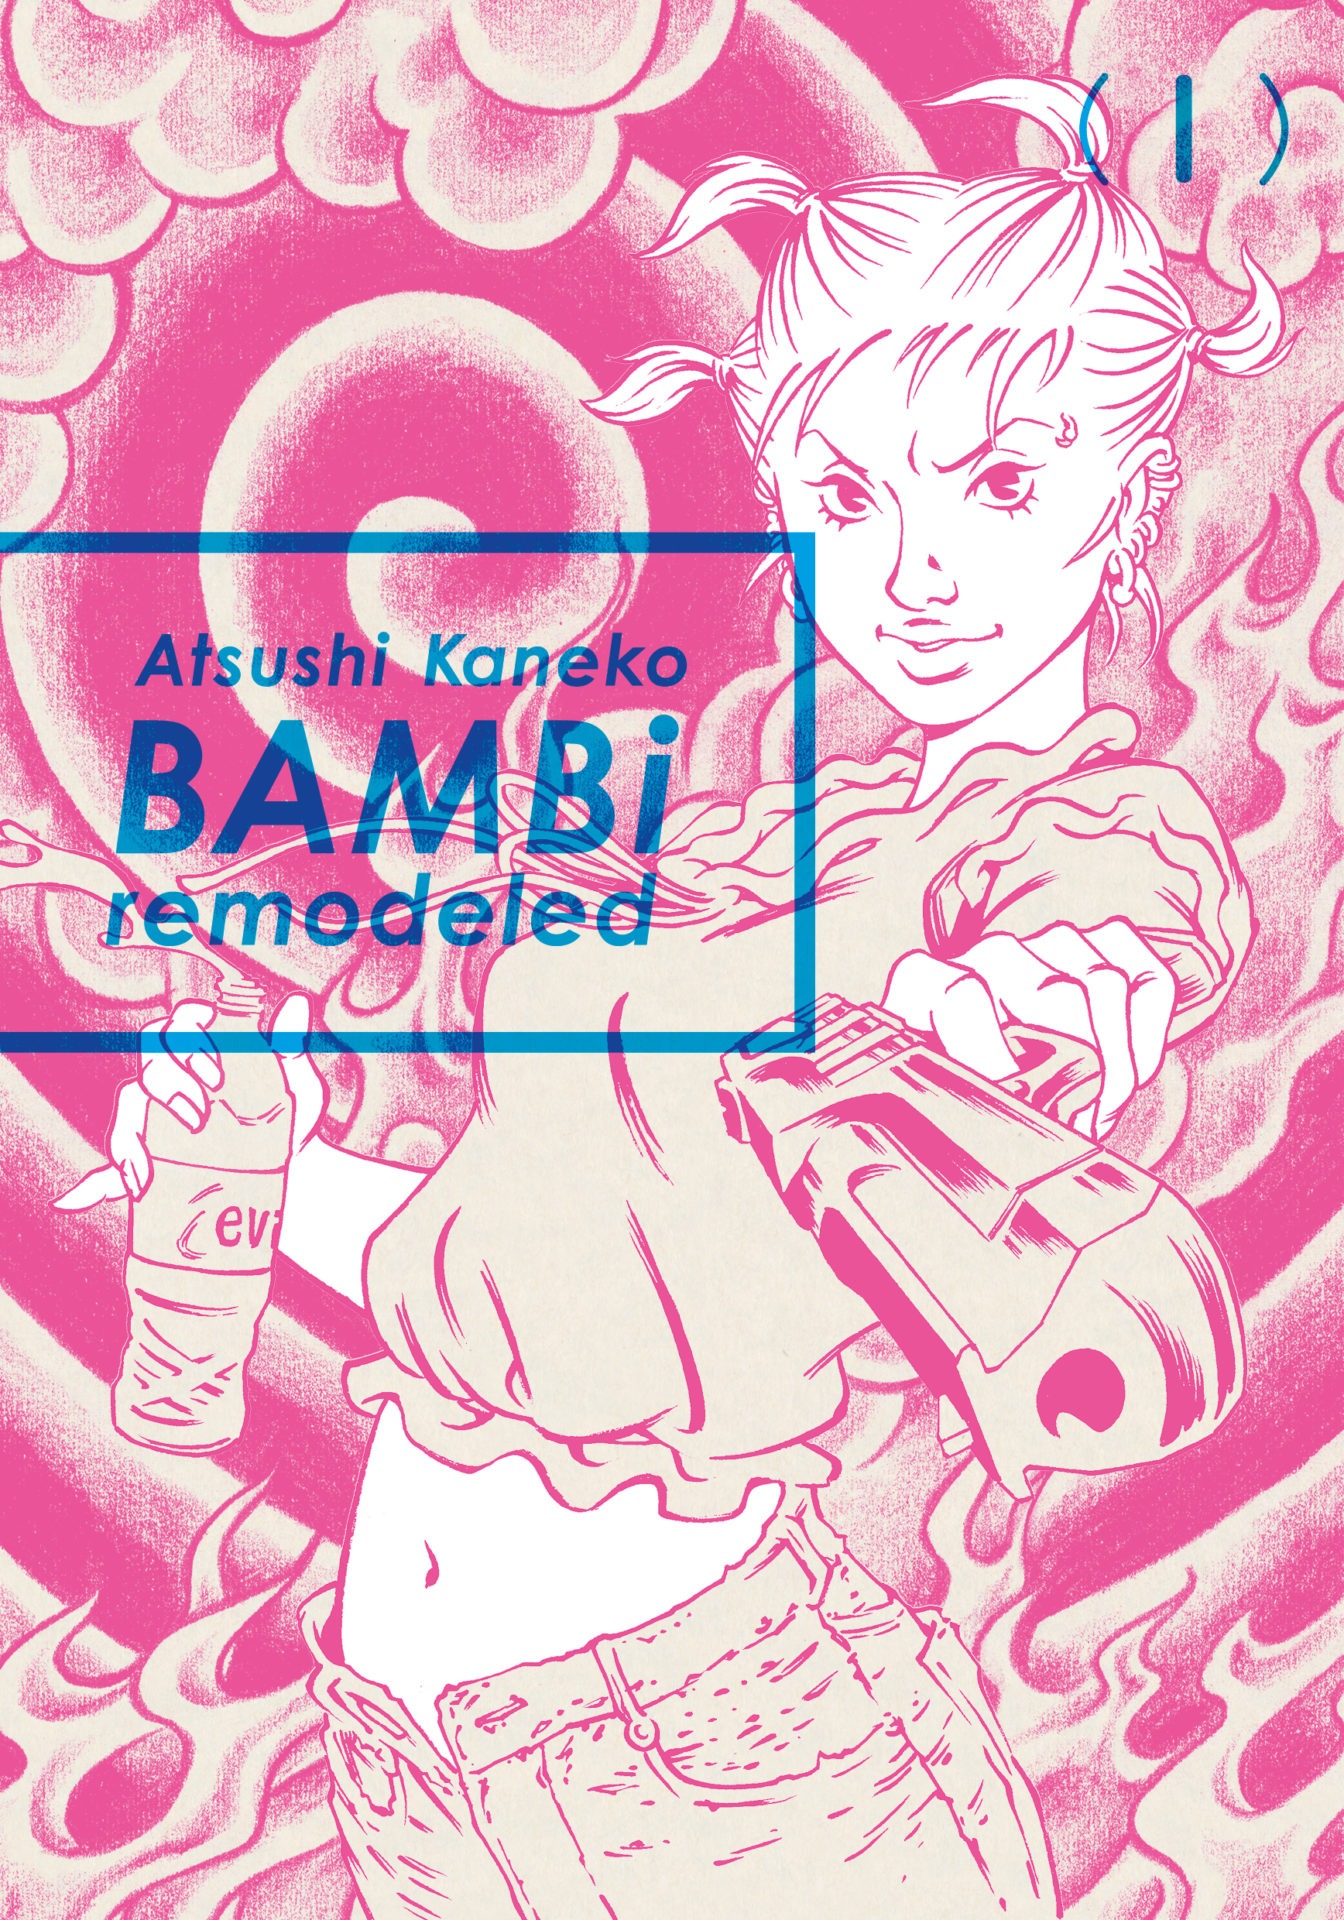 Couverture du manga Bambi Remodeled vol. 1